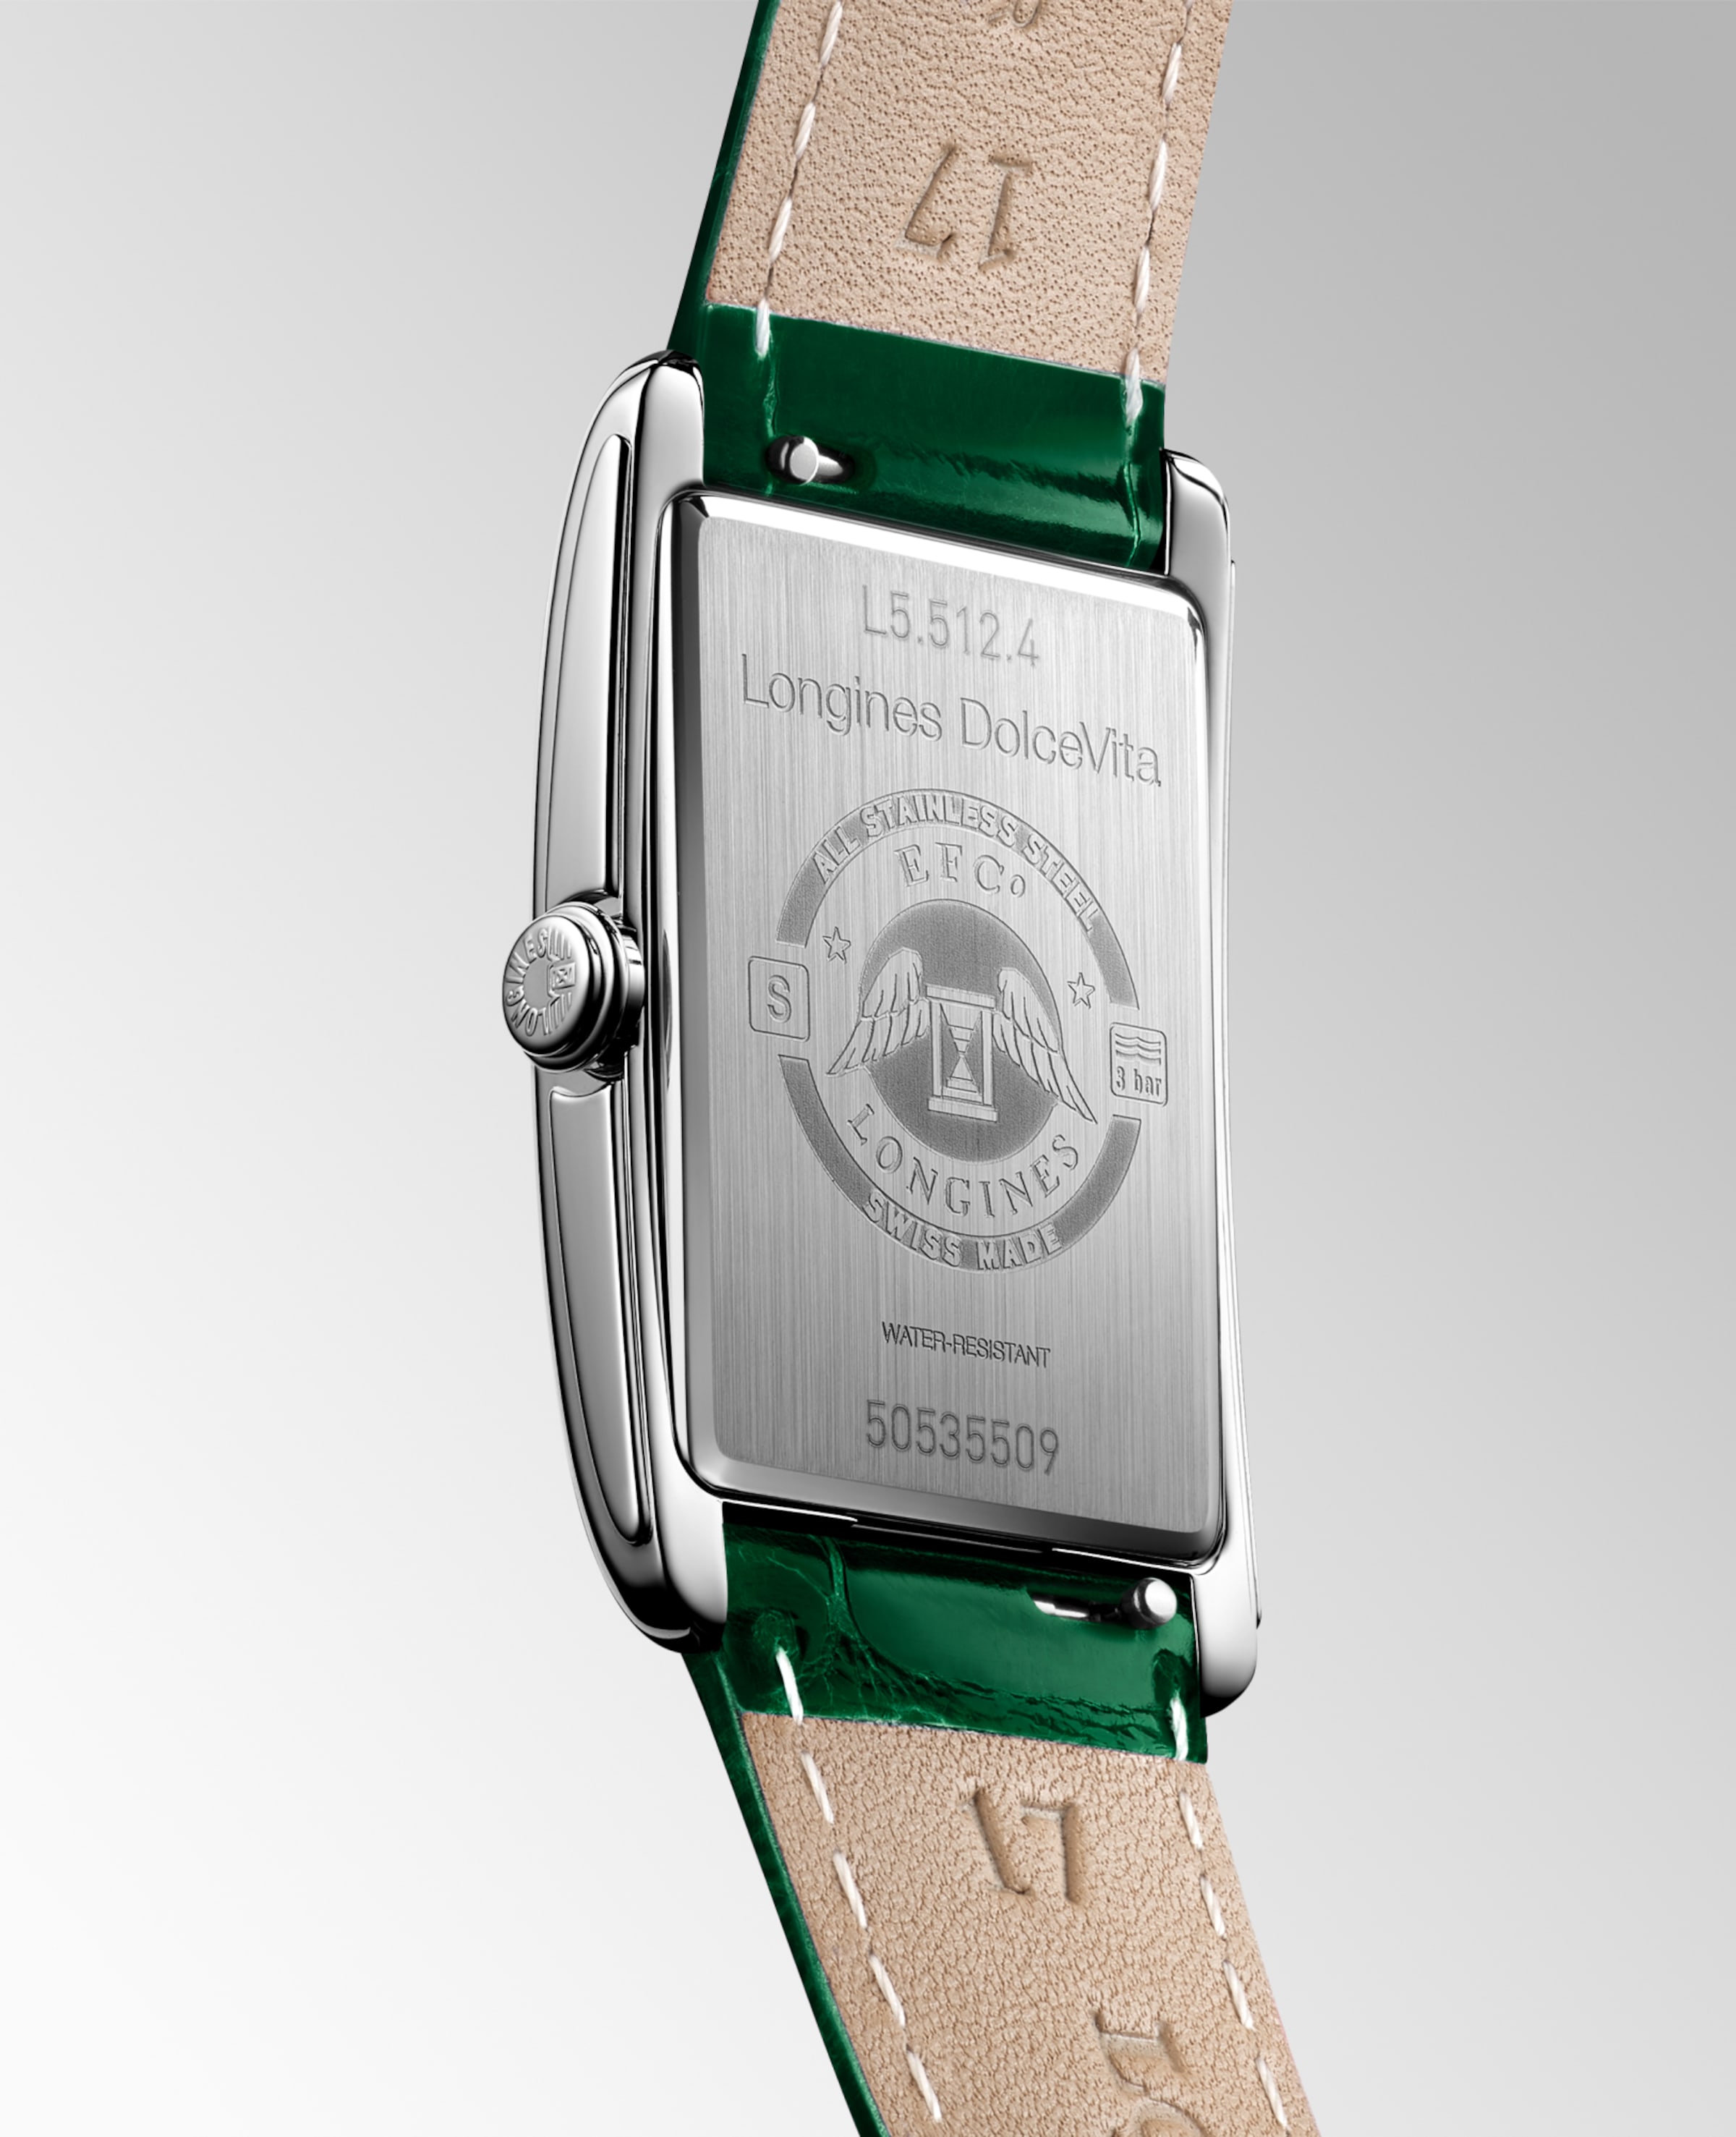 Longines DOLCEVITA Quartz Stainless steel Watch - L5.512.4.71.A